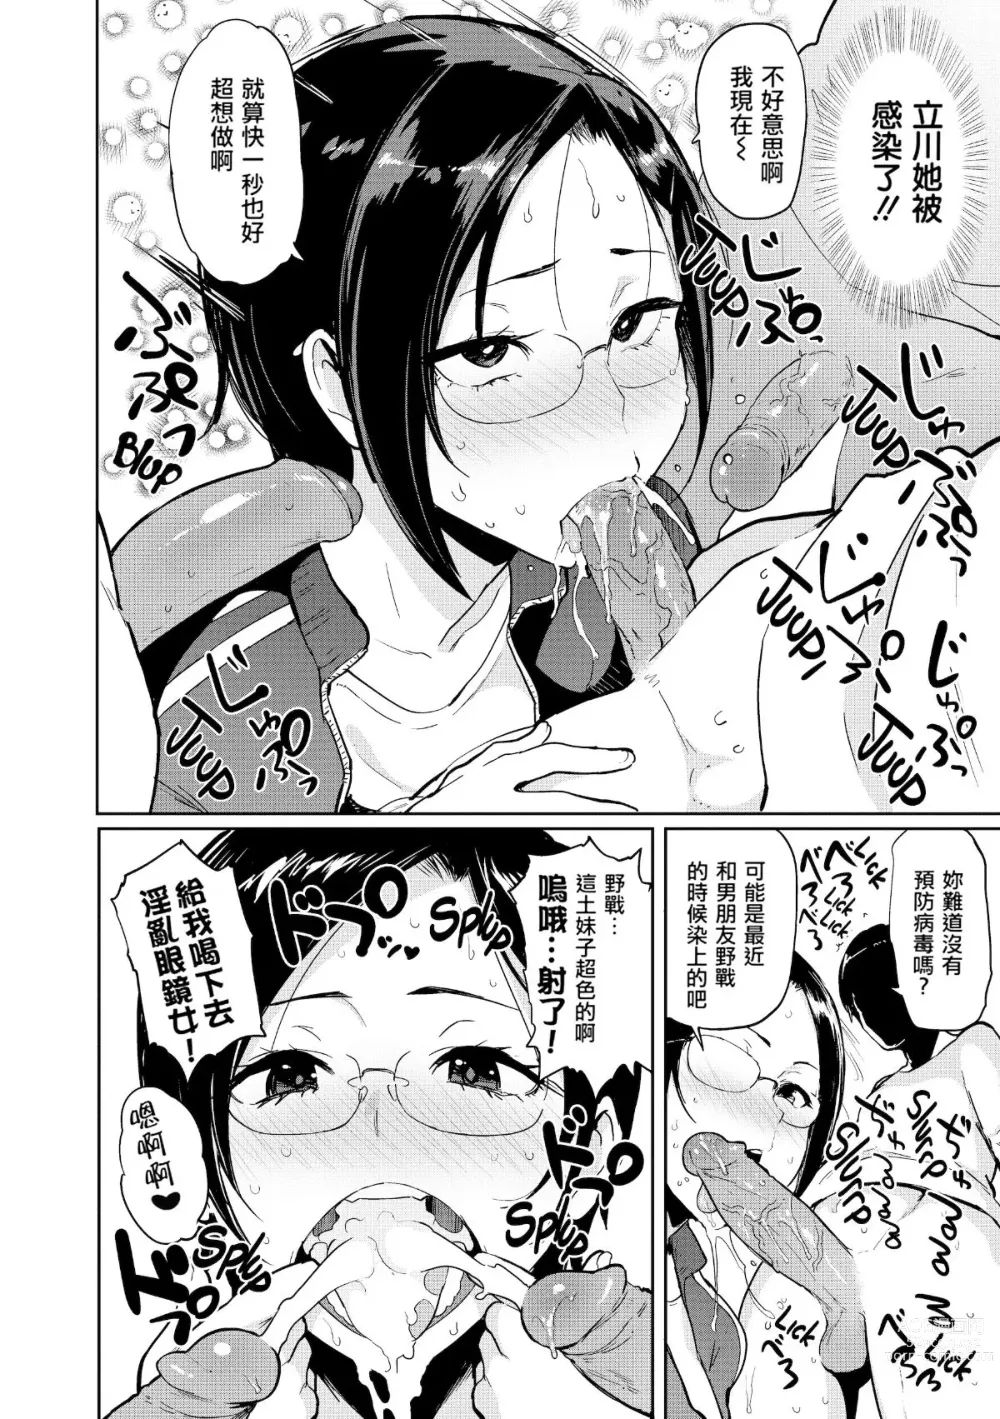 Page 210 of doujinshi Heat Alert 発情警報